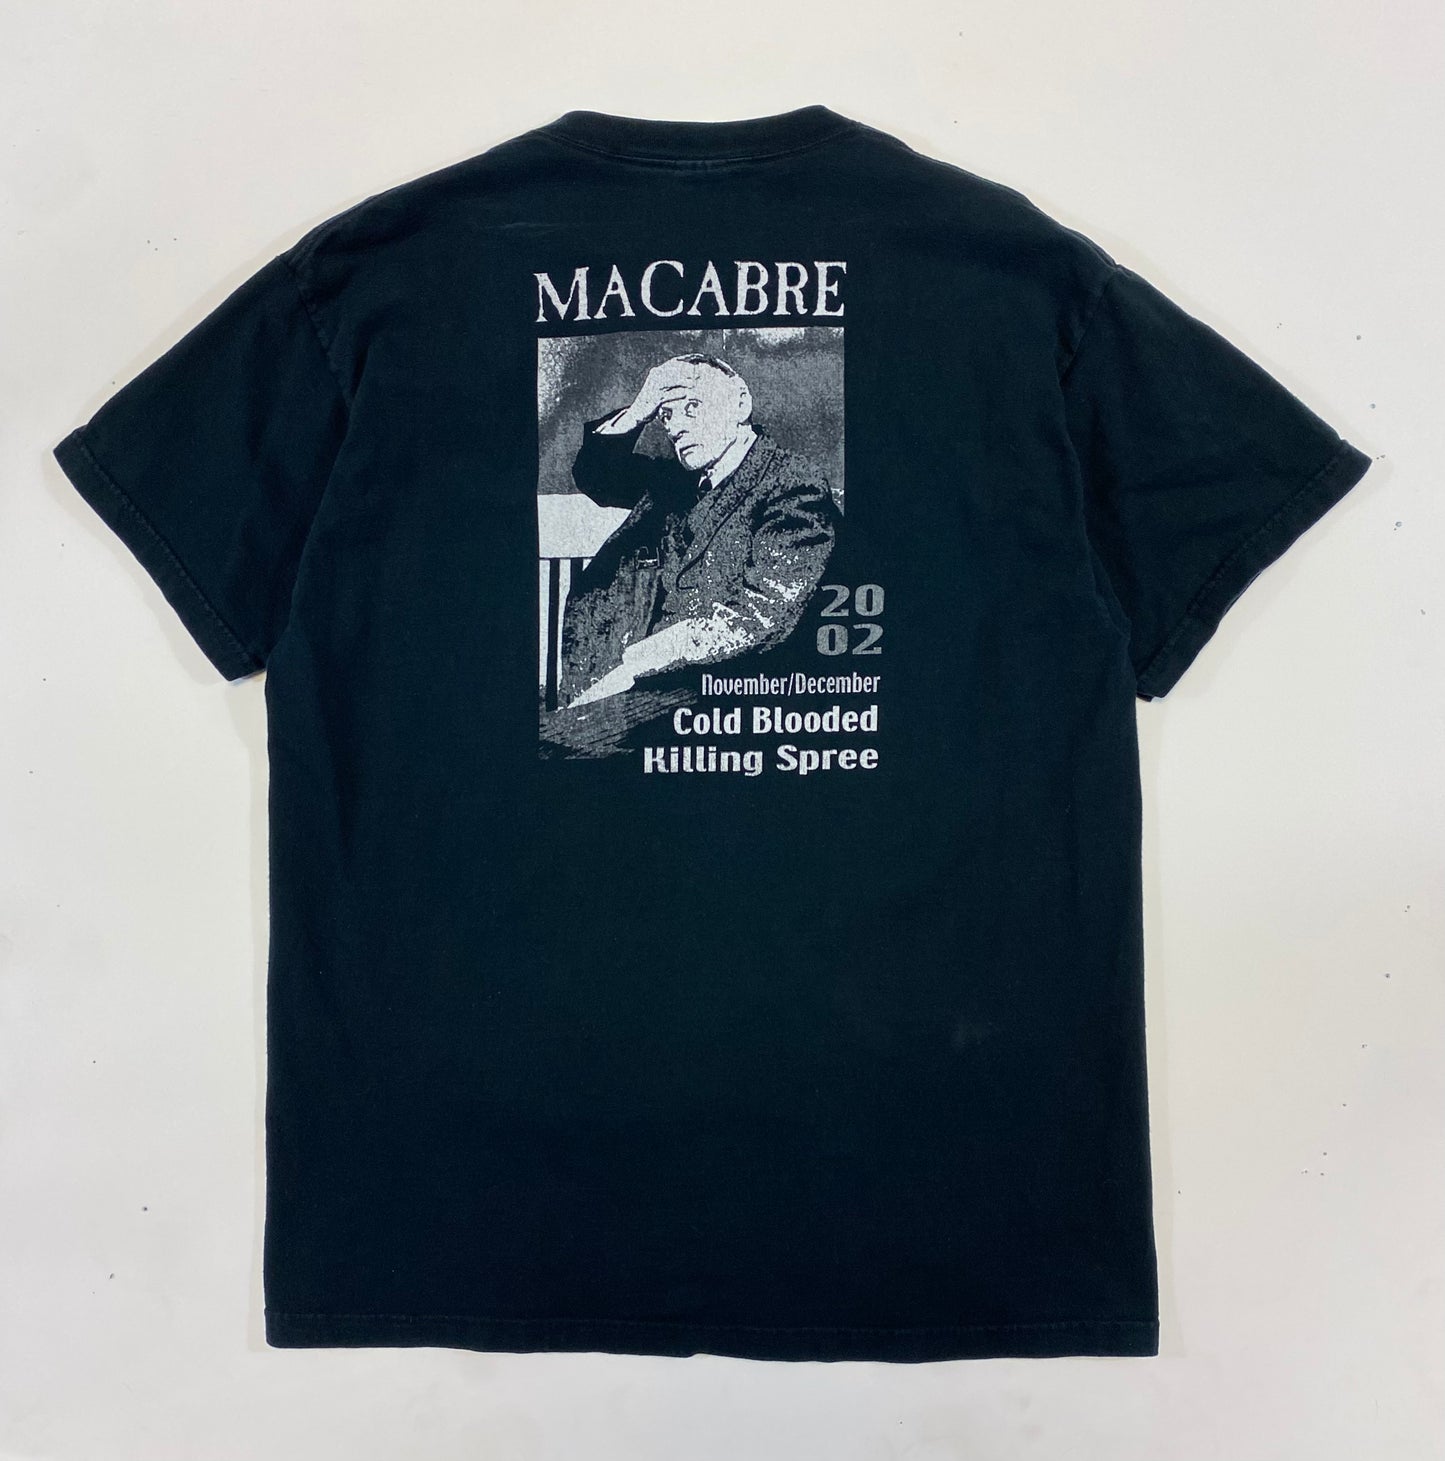 2002 Macabre Killing Spree Tour T-Shirt